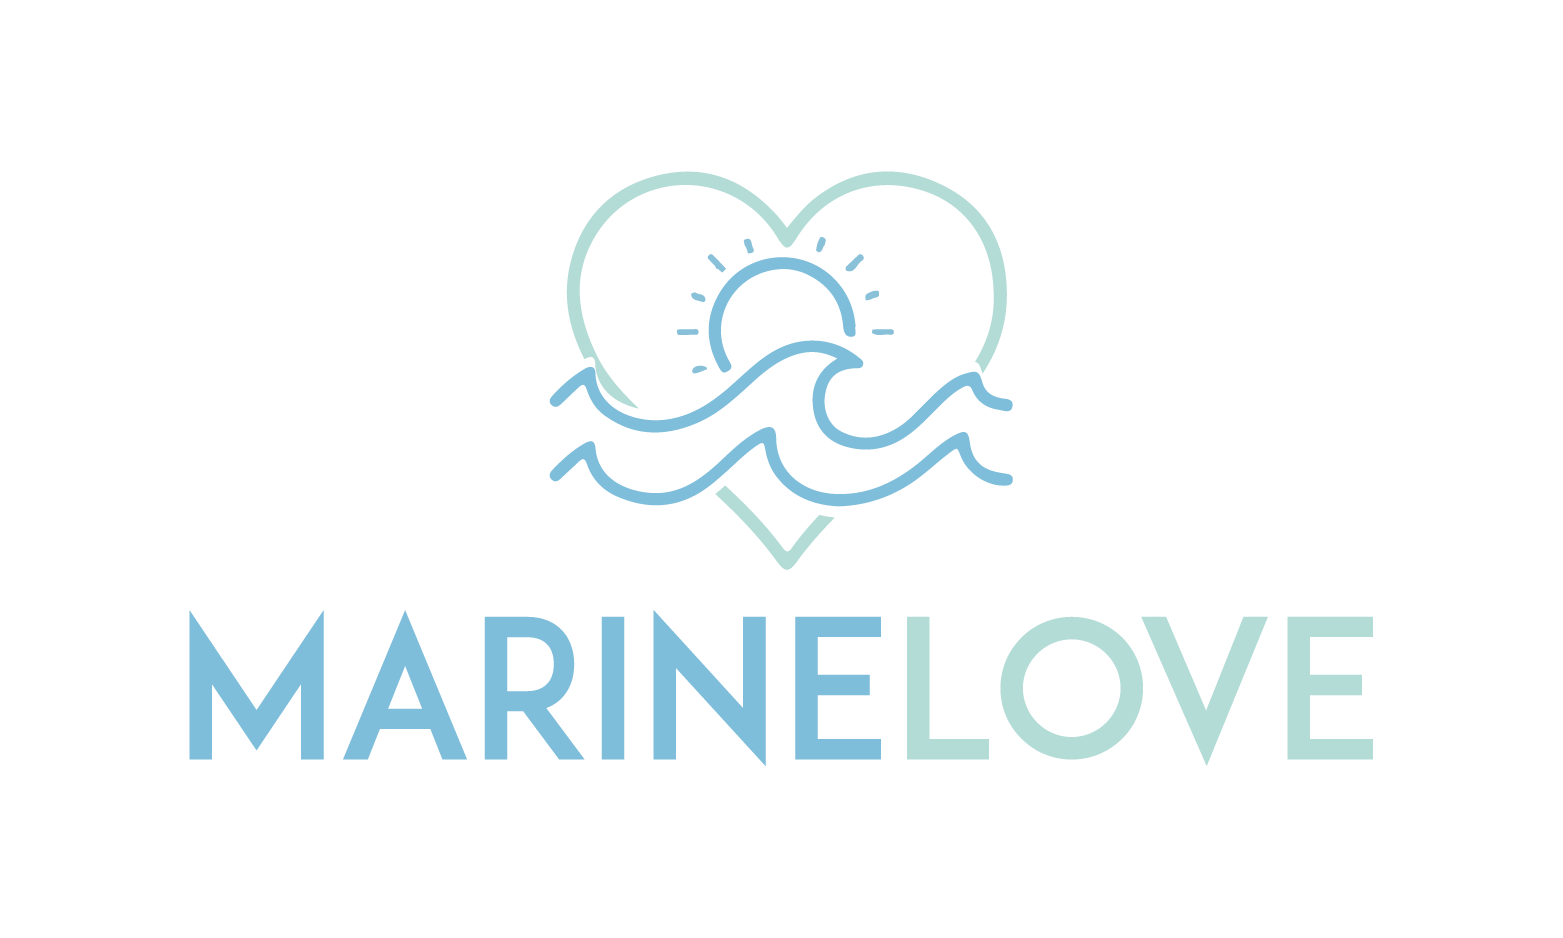 MarineLove.com - Creative brandable domain for sale